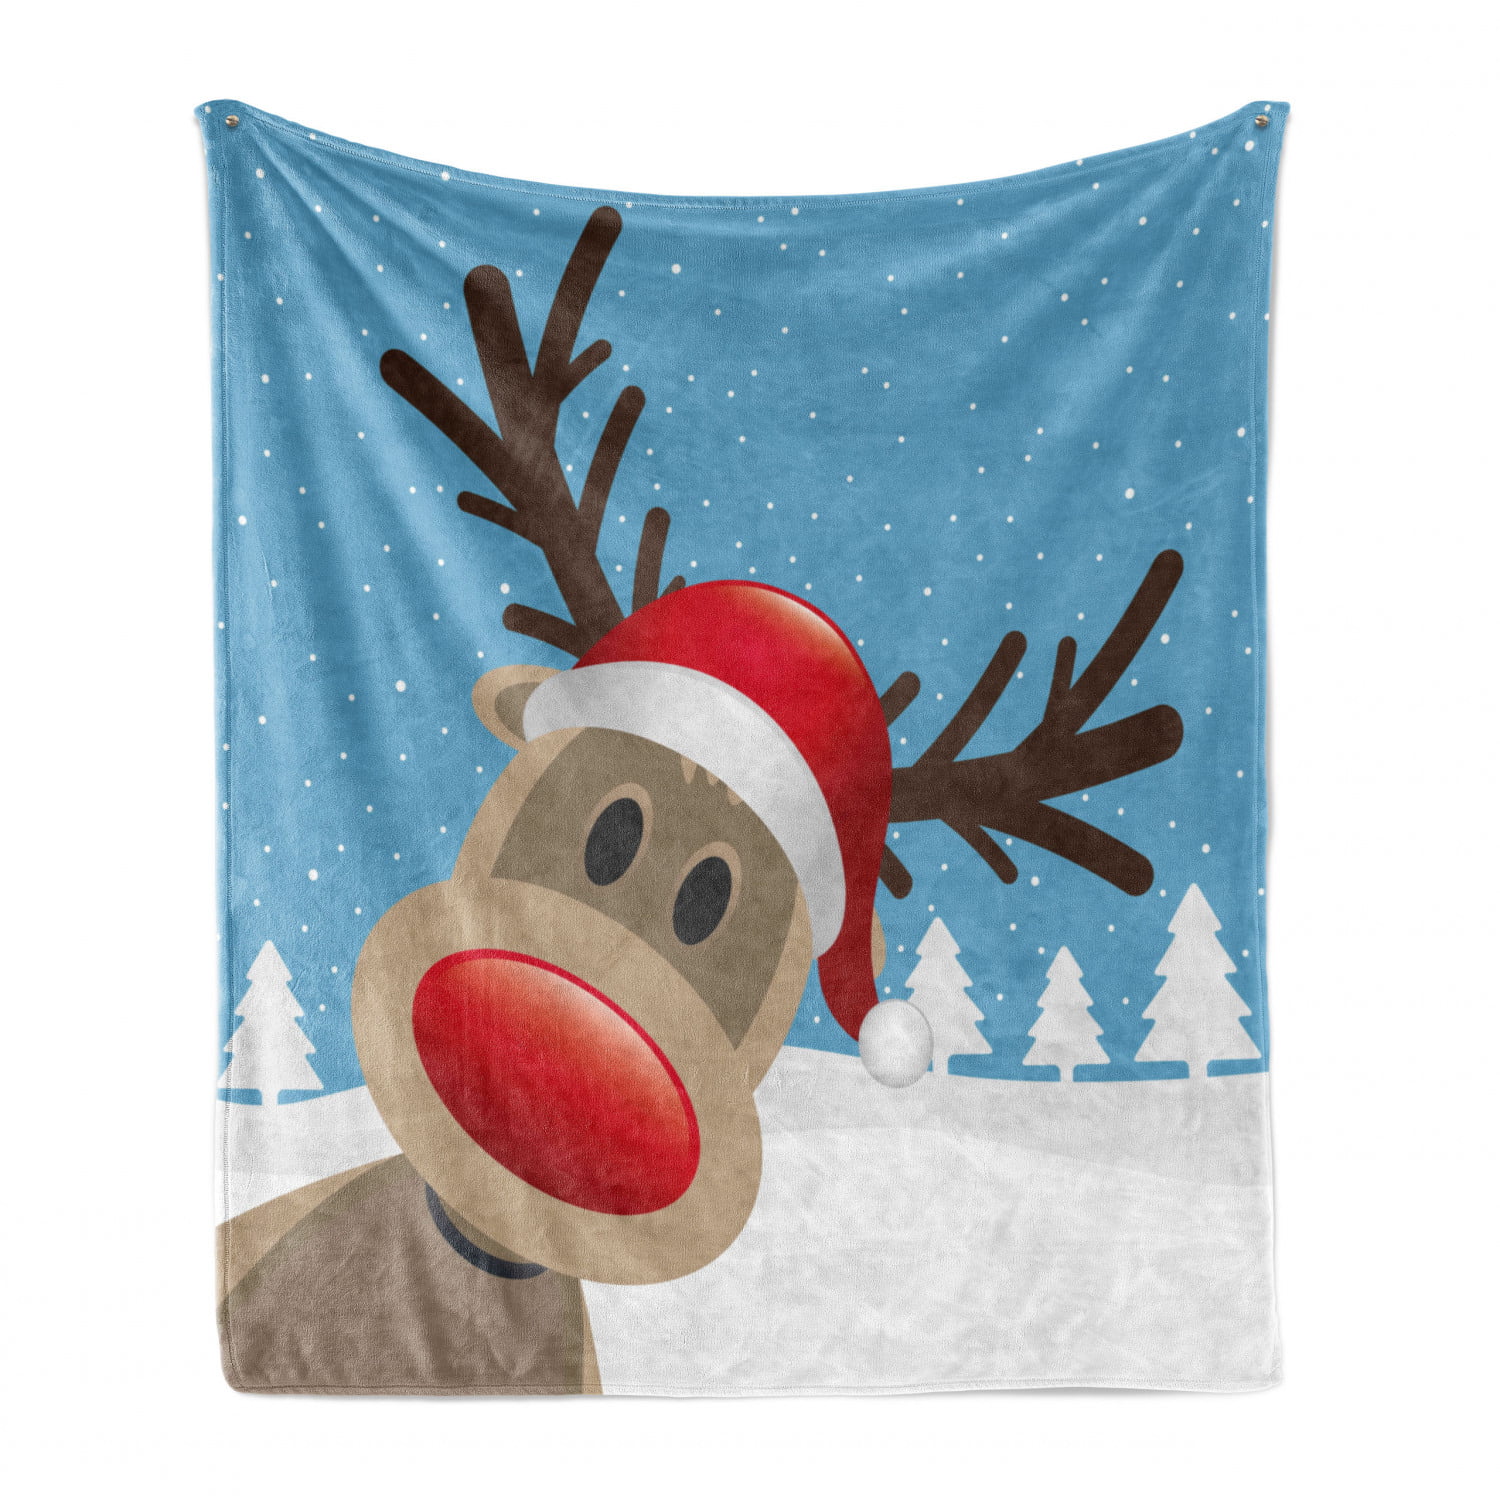 Santa And His Reindeer's Christmas Snow Scene Fleece Blanket Cover Throw Over 